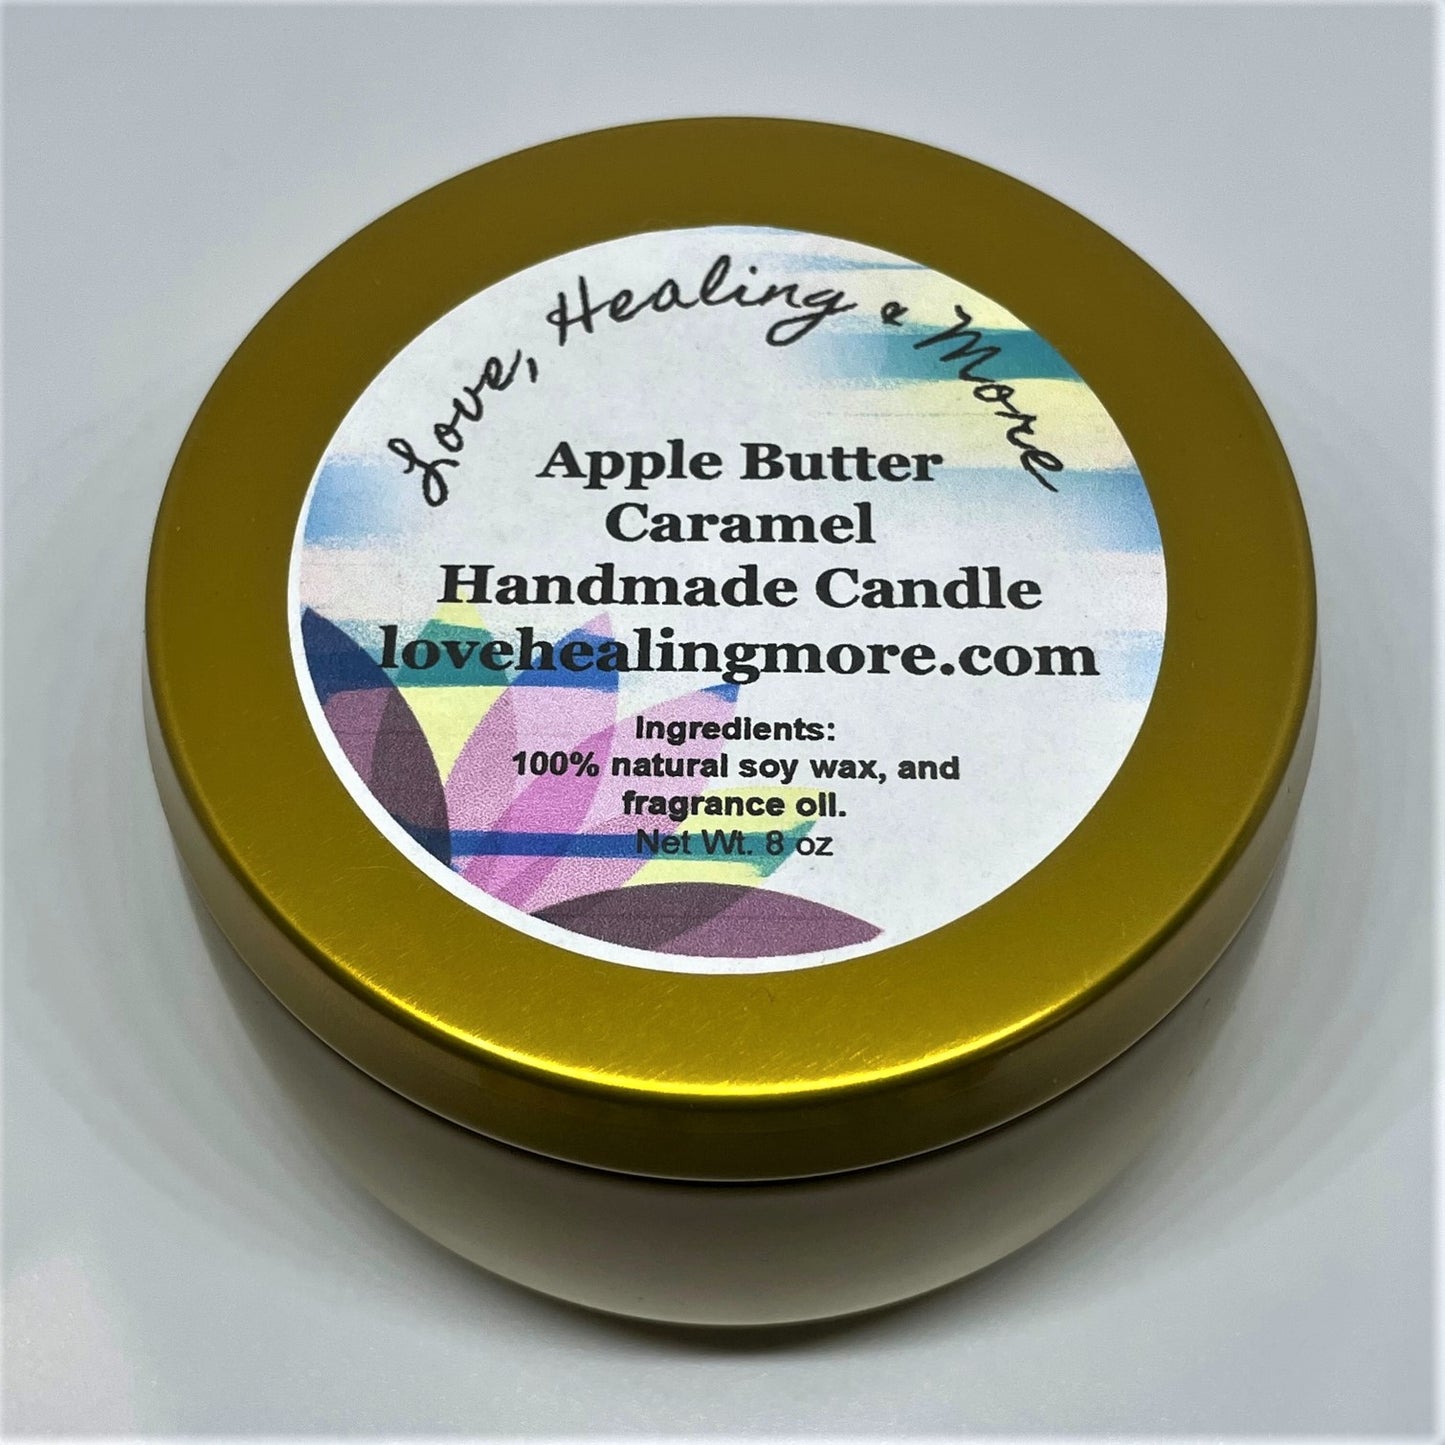 Handmade 8 oz. Apple Butter Caramel Fragrance Candle